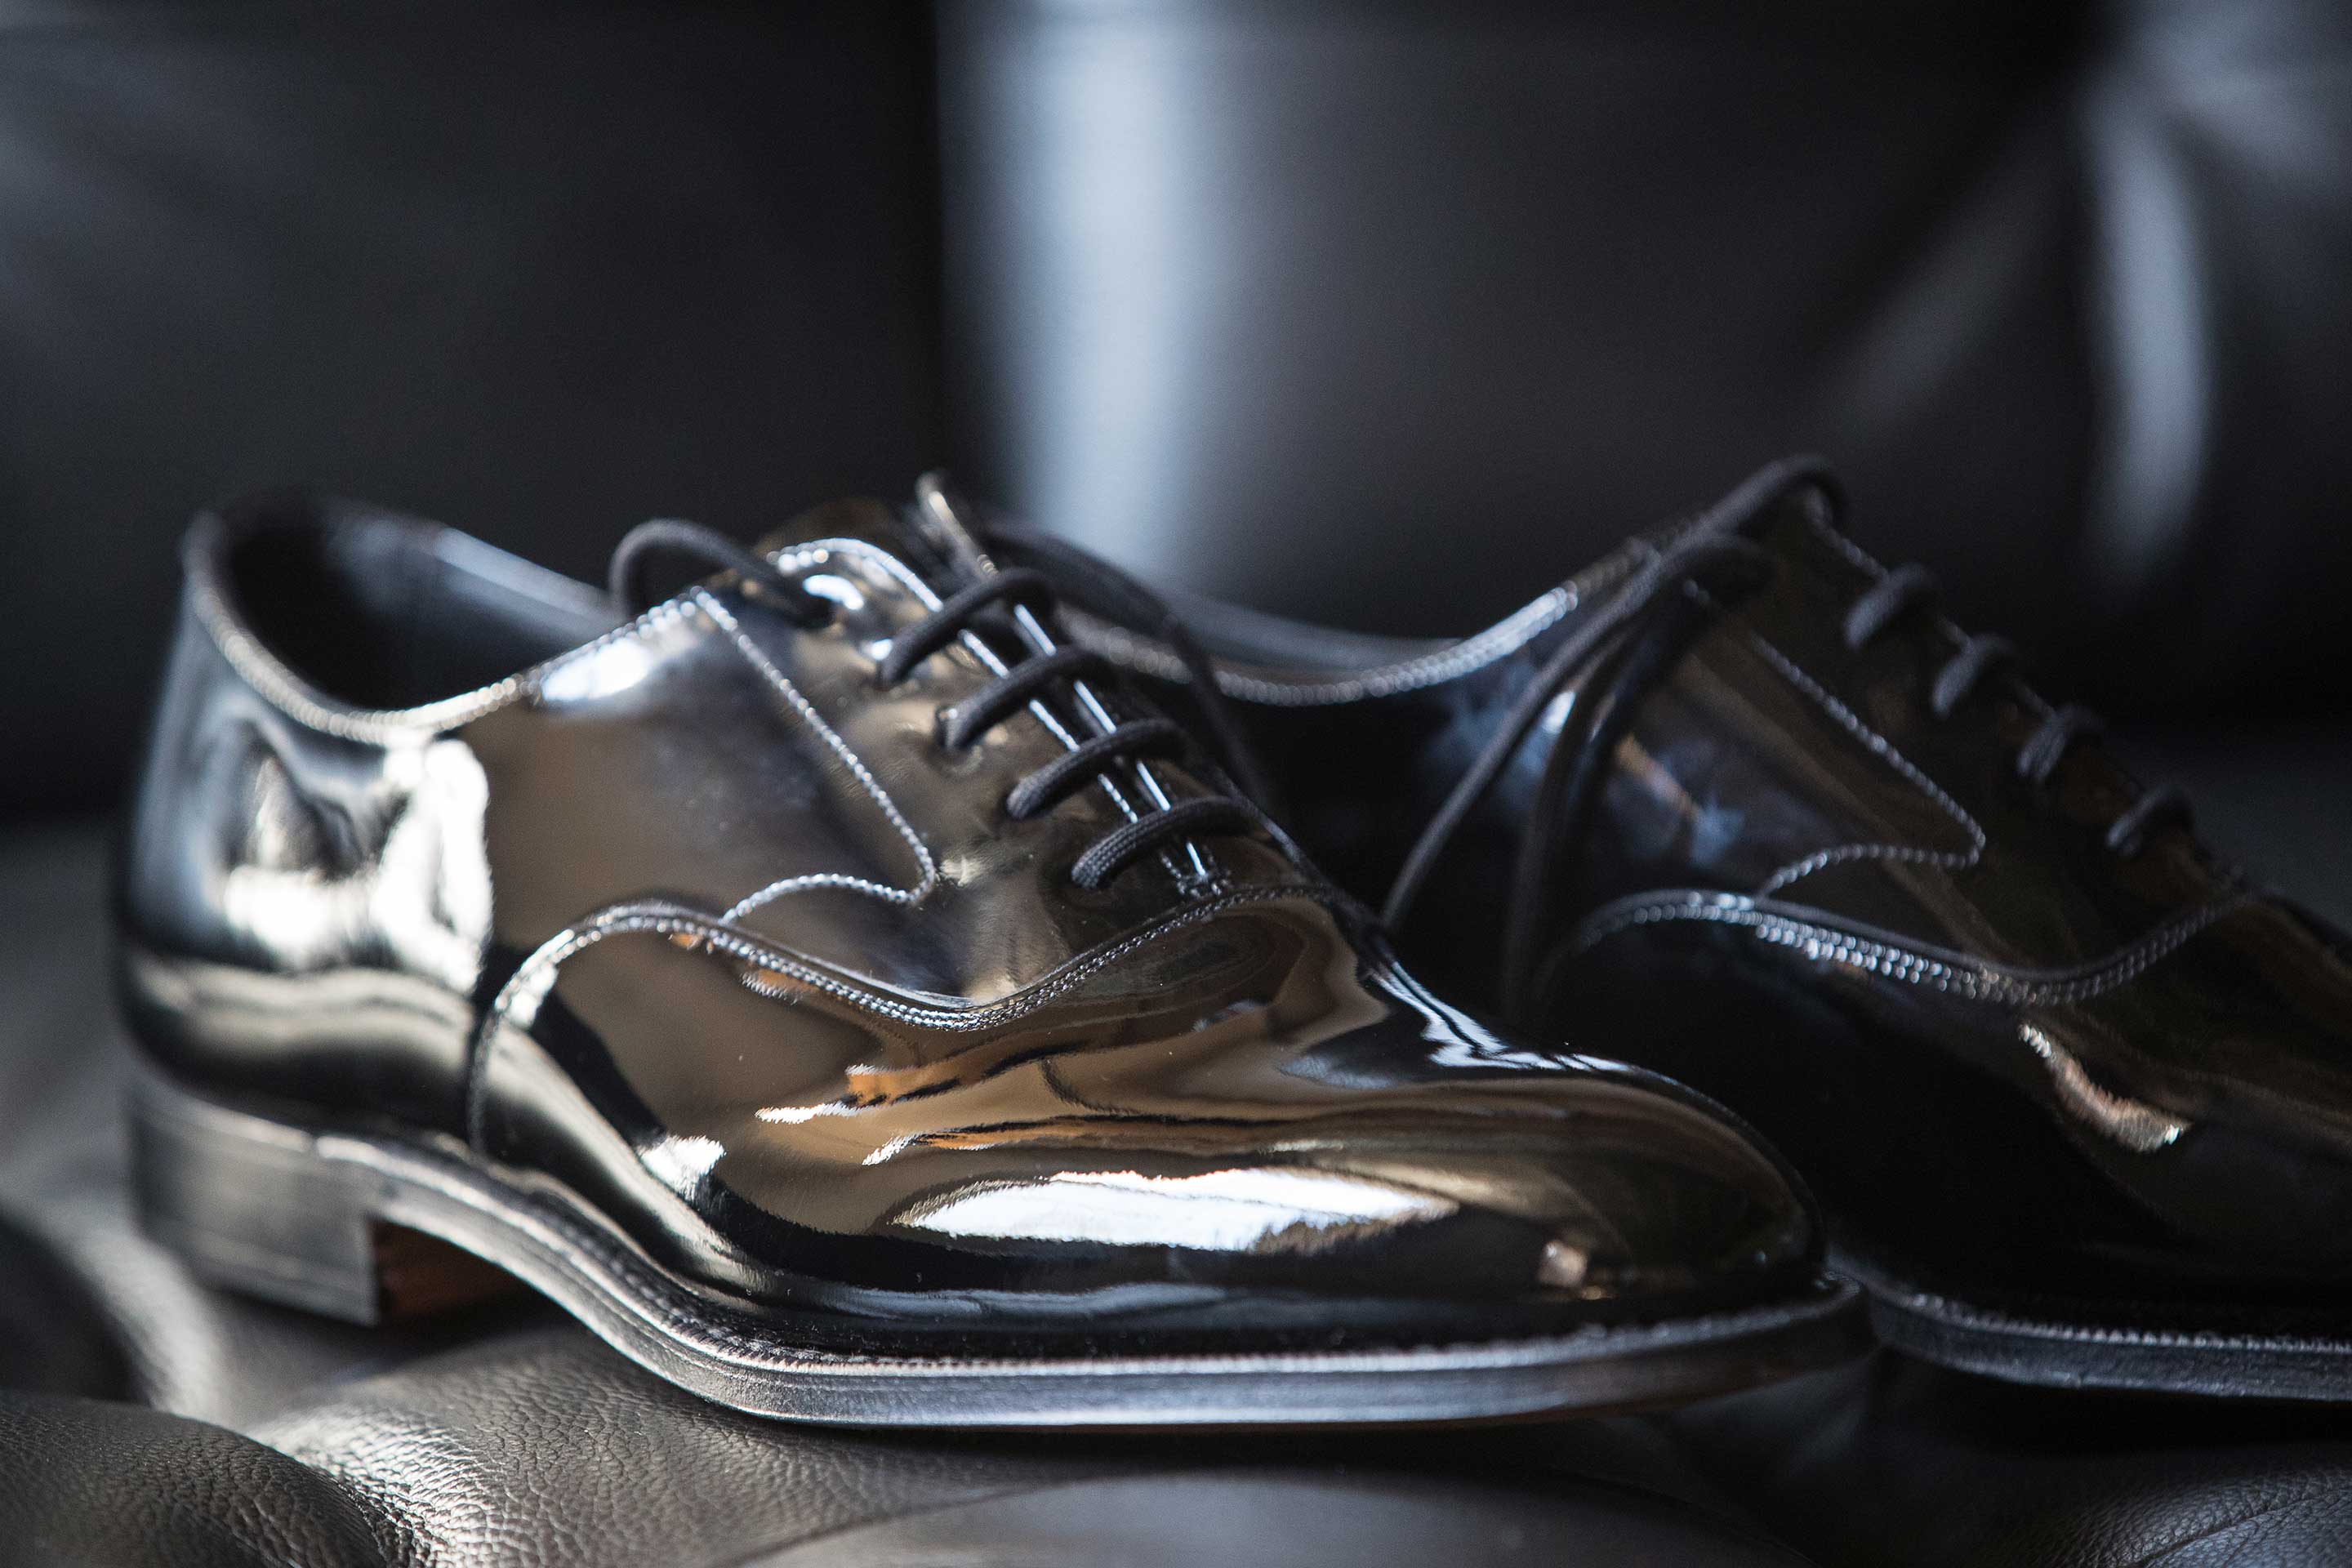 Men Dress Shoes Men Wedding Fashion Office Footwear High Quality Patent  Leather Comfy Men Formal Shoes Brand Men Shoes